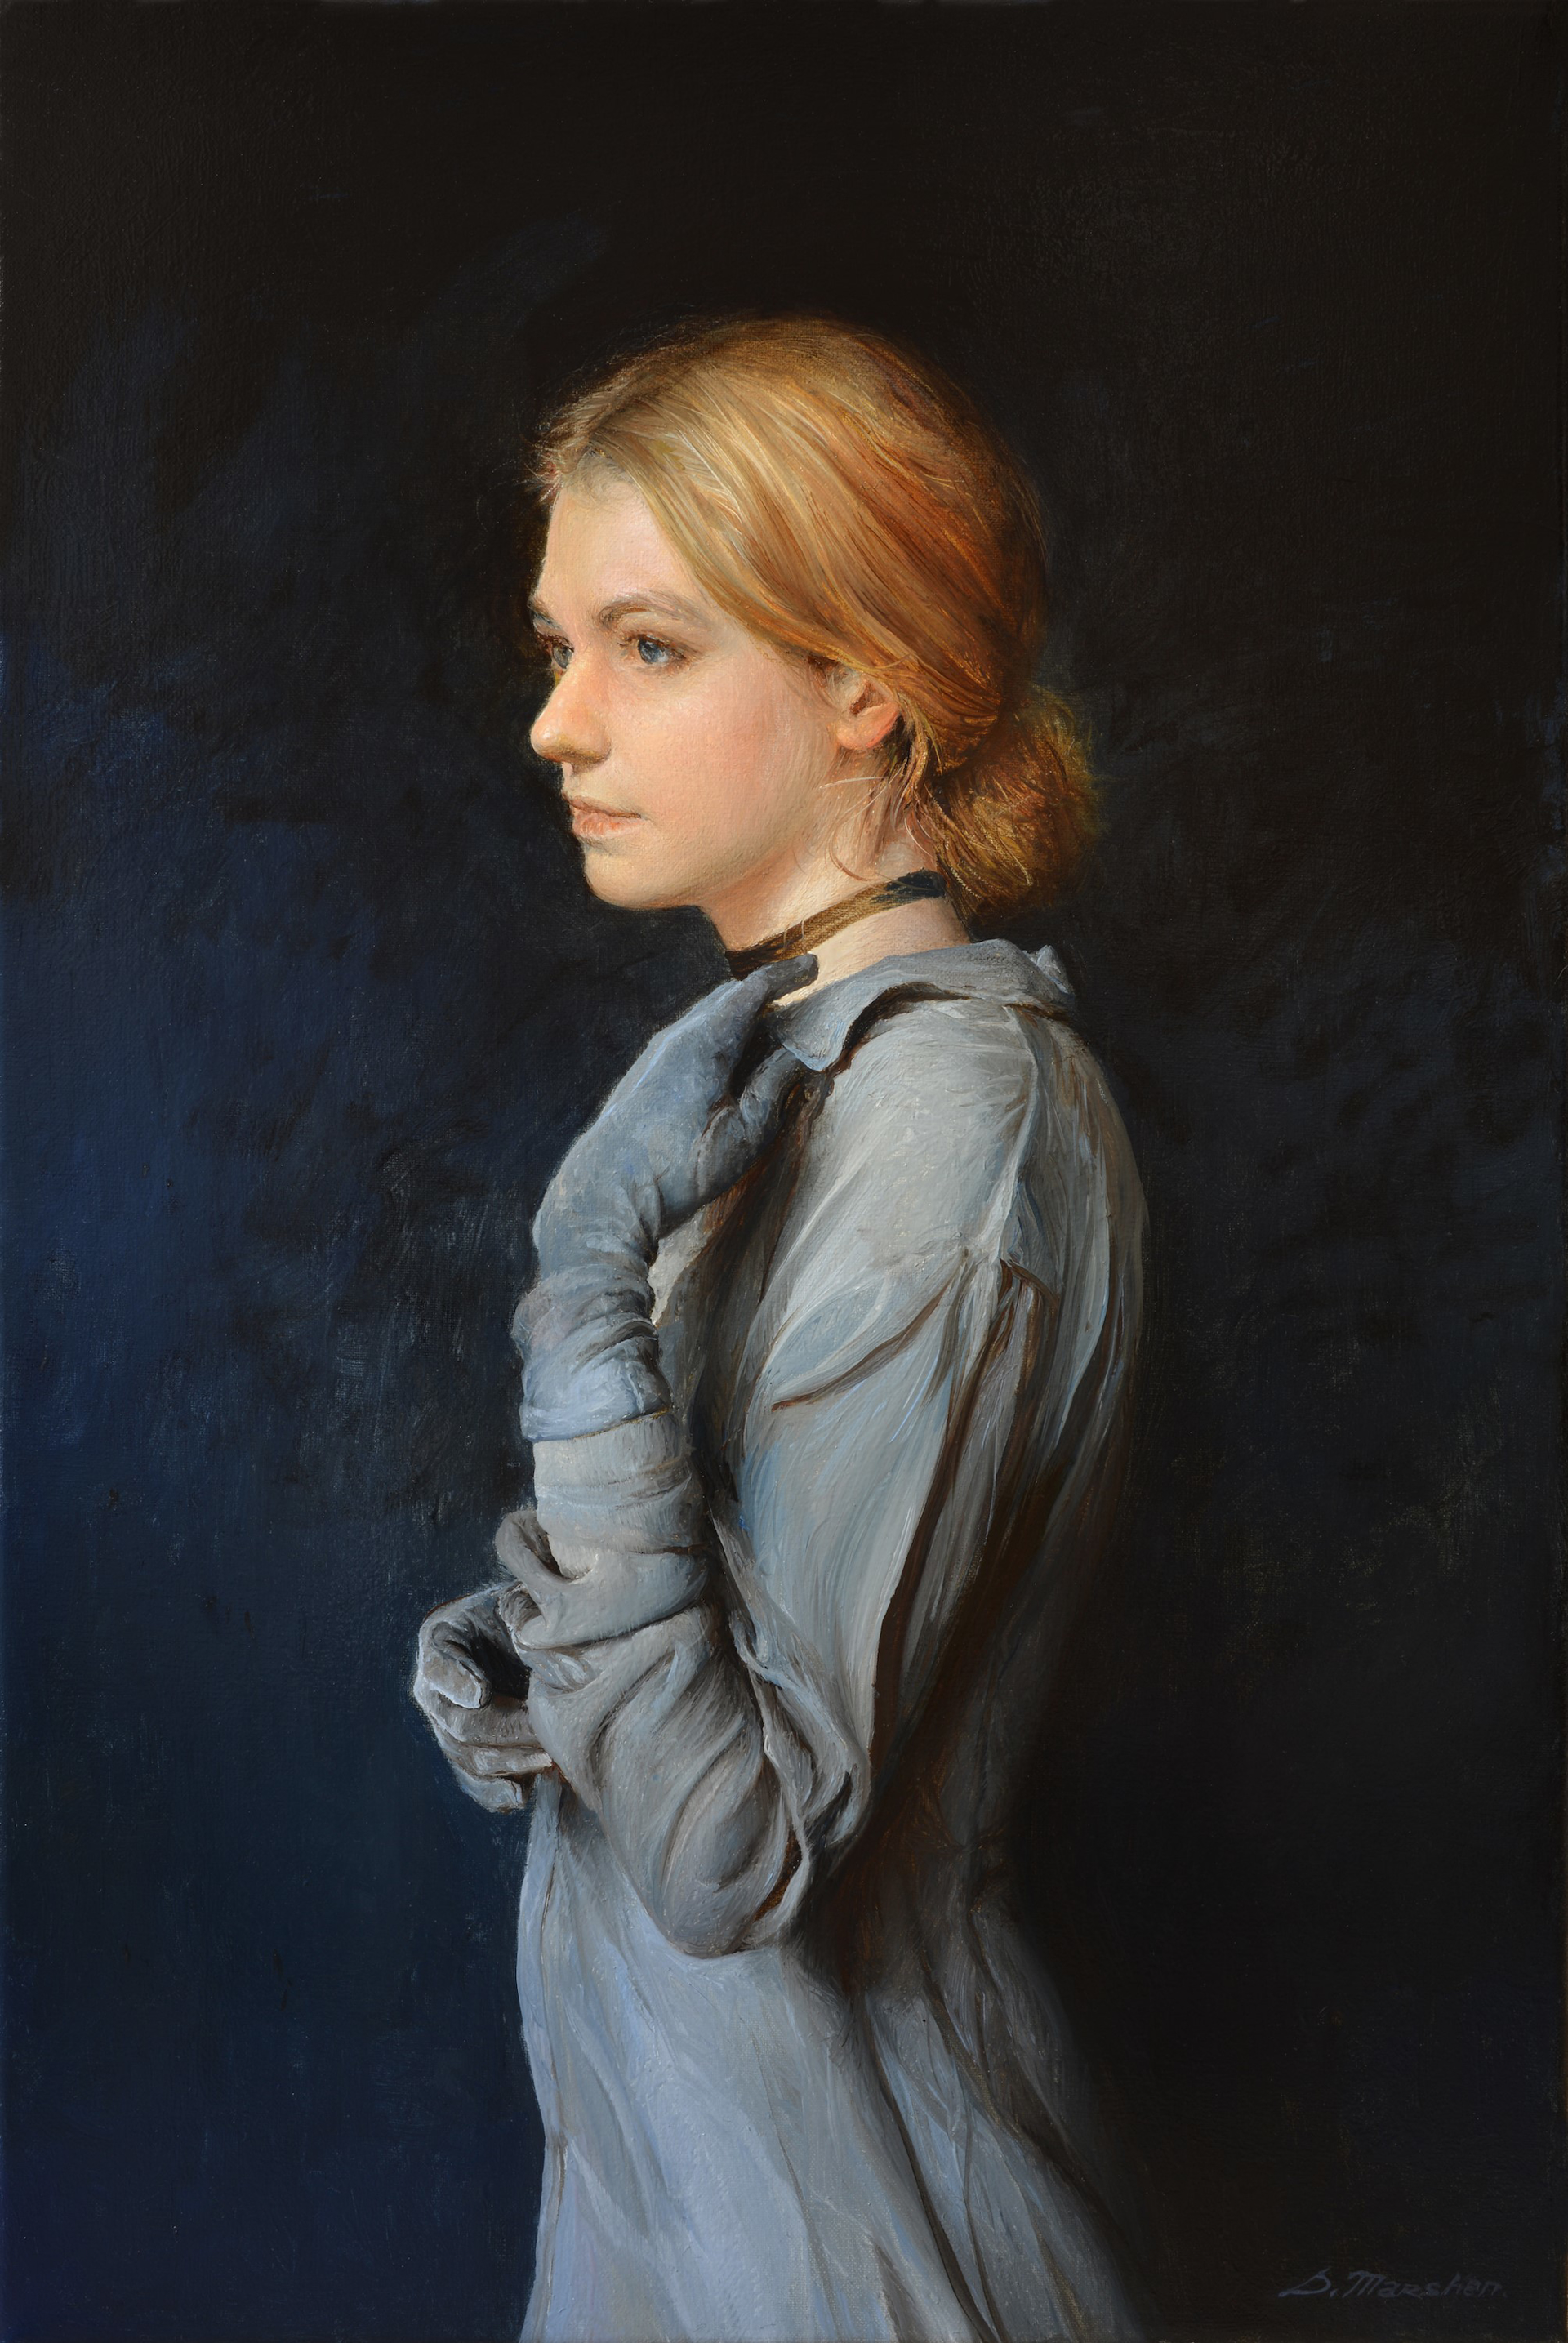 Girl in Gloves by Serge Marshennikov